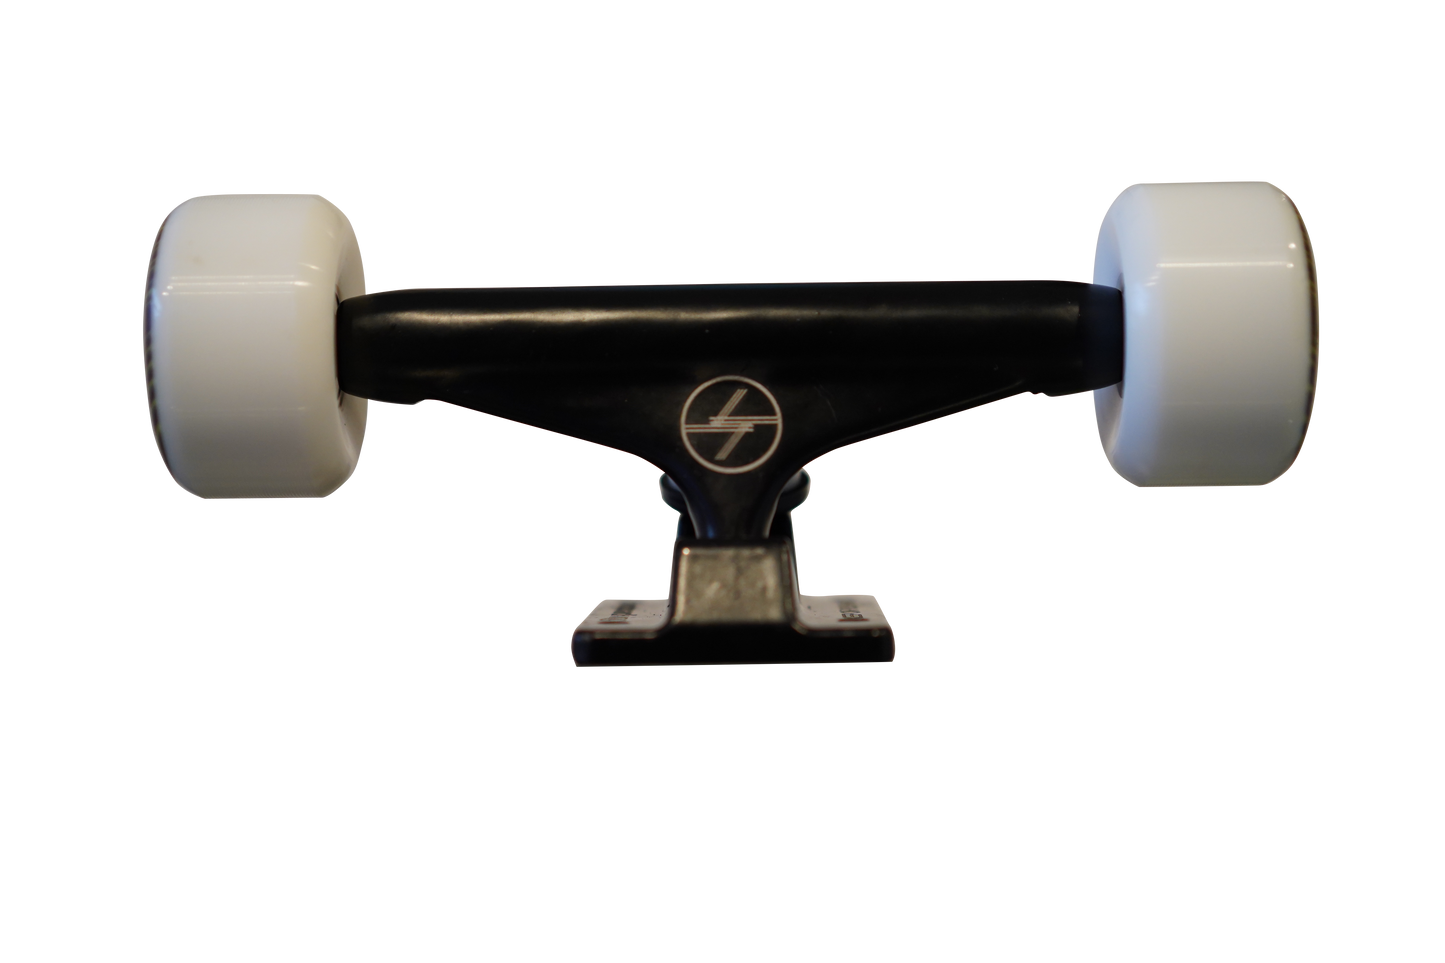 Skateboard TWB: 139mm Truck, Wheel, Bearing